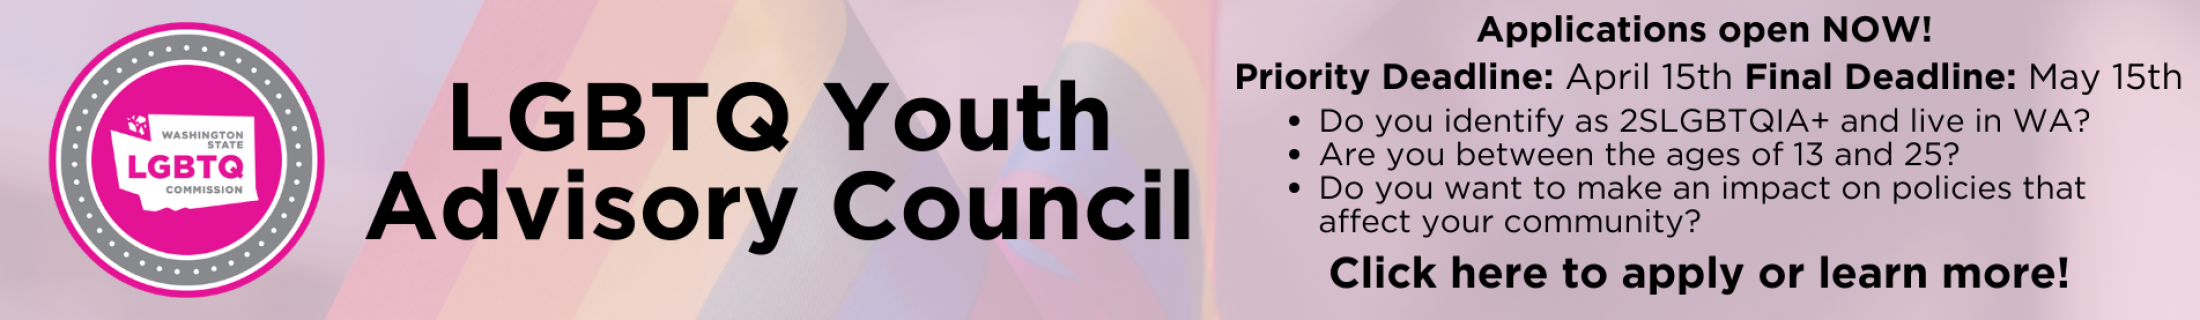 LGBTQ Youth Advisory Council Banner